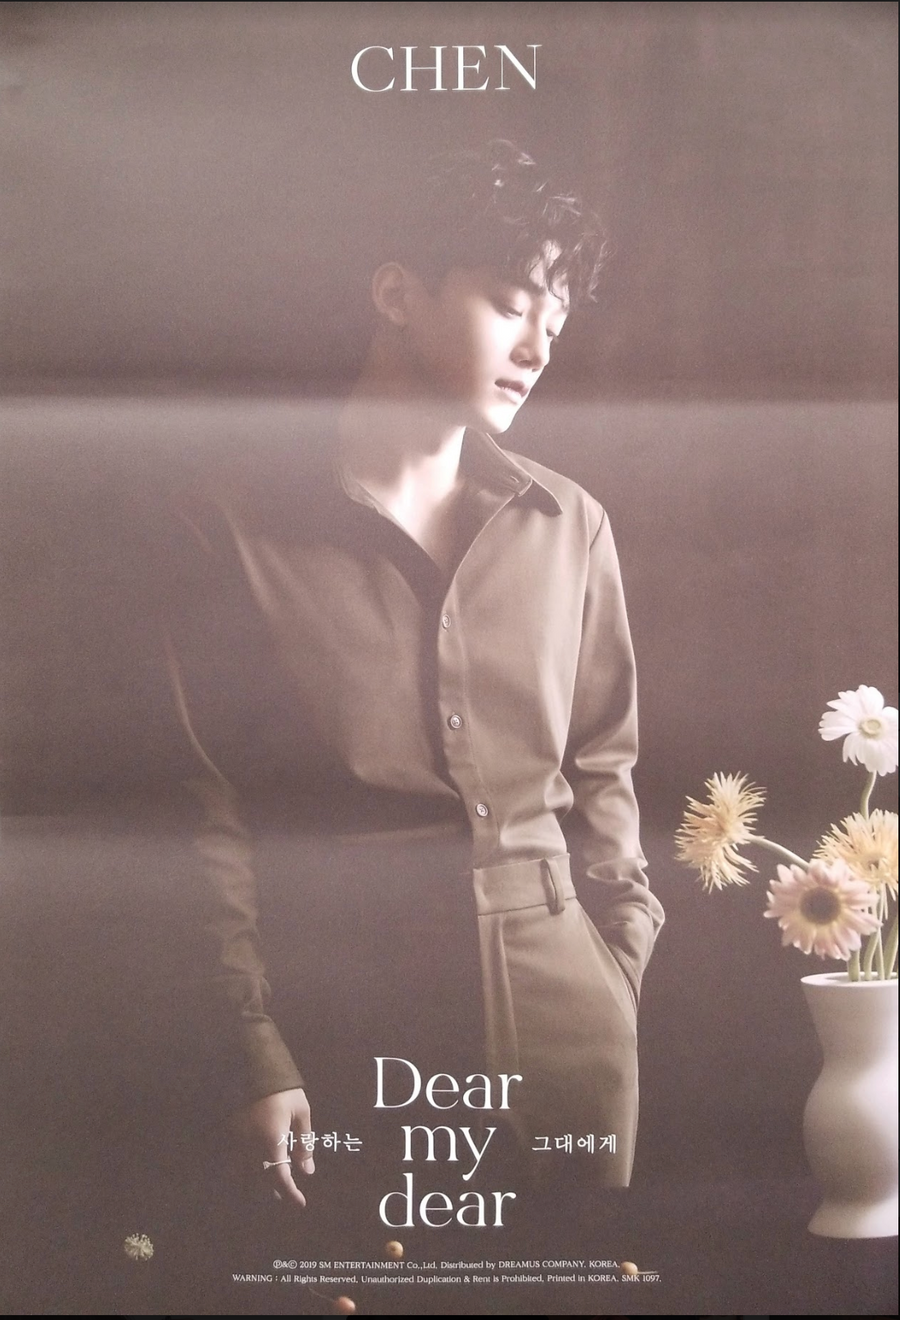 Chen 2nd Mini Album Dear My Dear Official Poster - Photo Concept 6